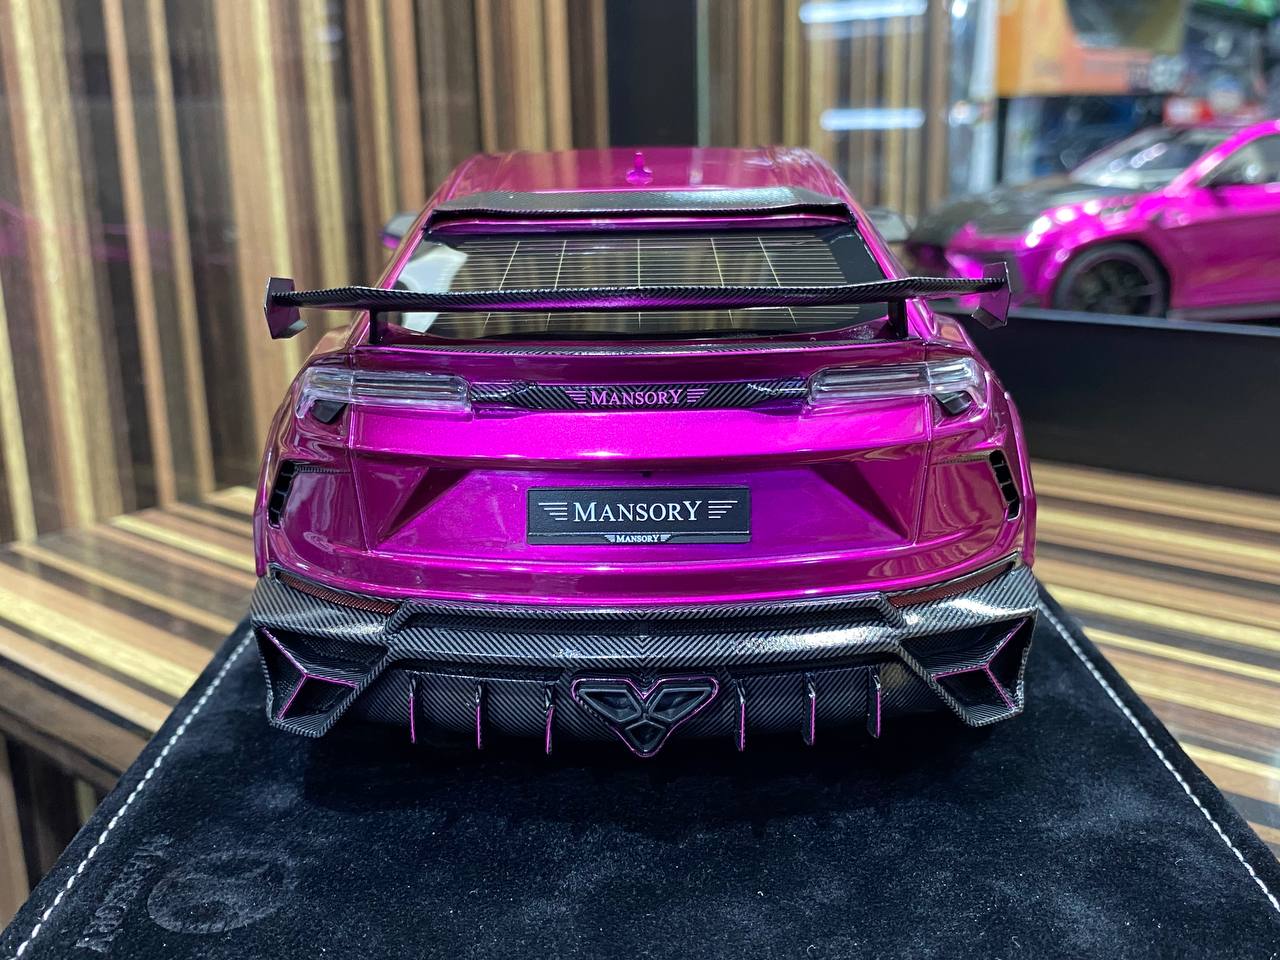 1/18 Timothy & Pierre Lamborghini URUS Venatus Purple Resin Model Car|Sold in Dturman.com Dubai UAE.